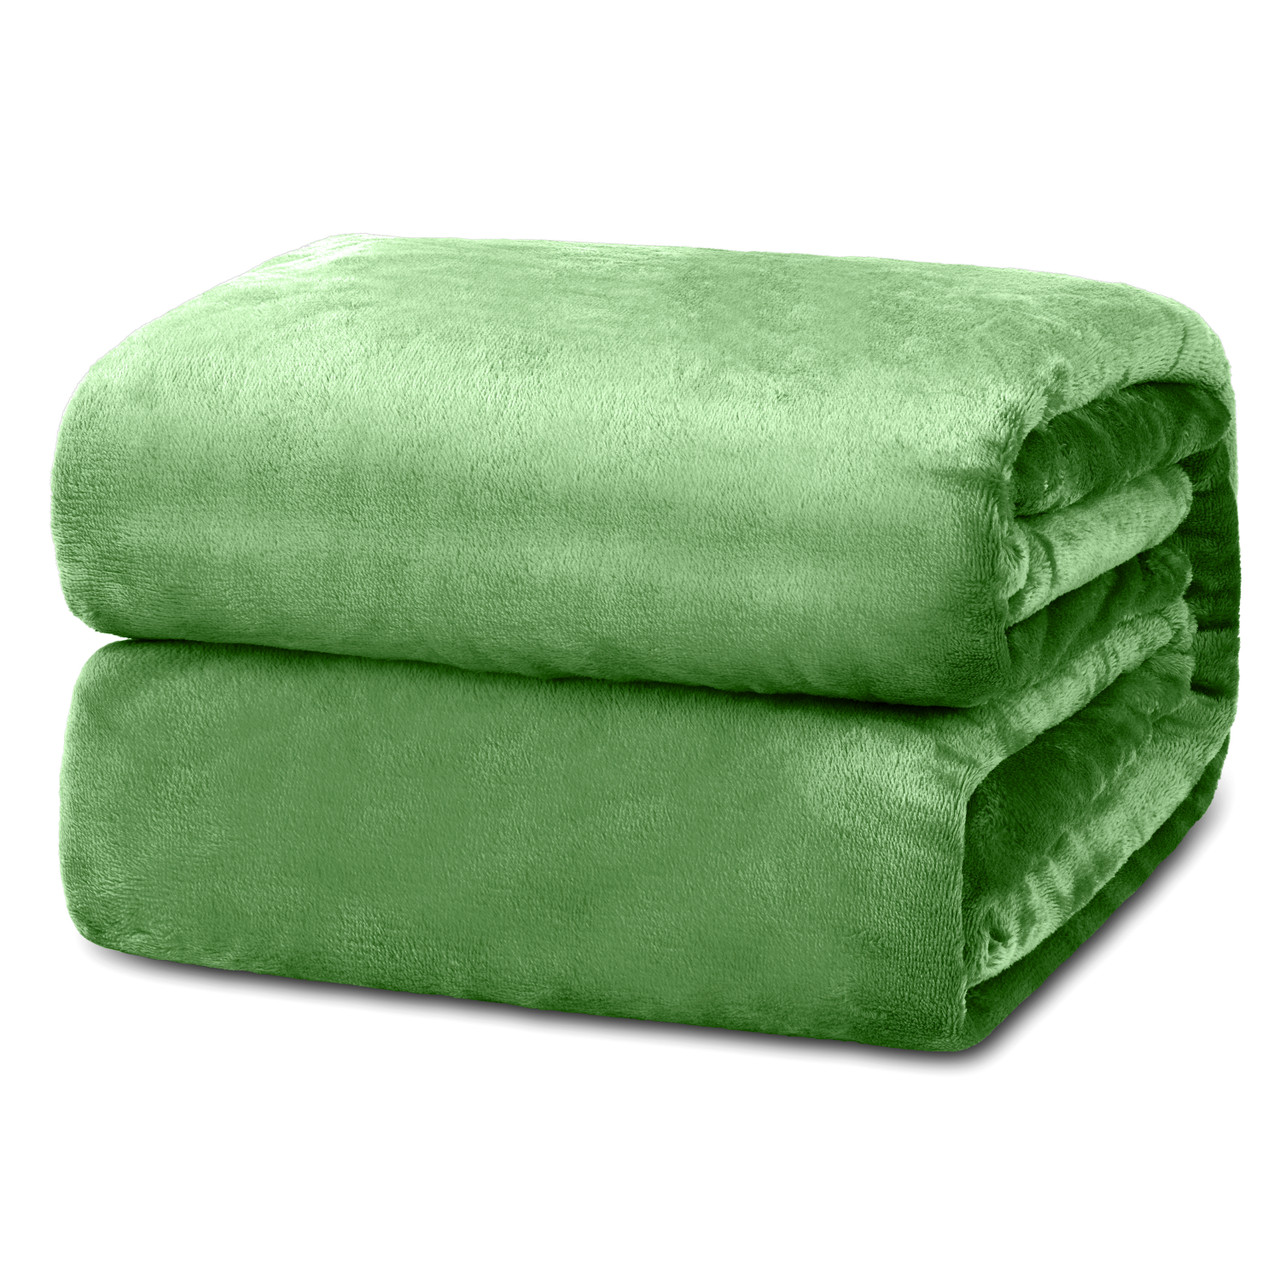 Warm and Soft Microfiber Fleece Blanket product image